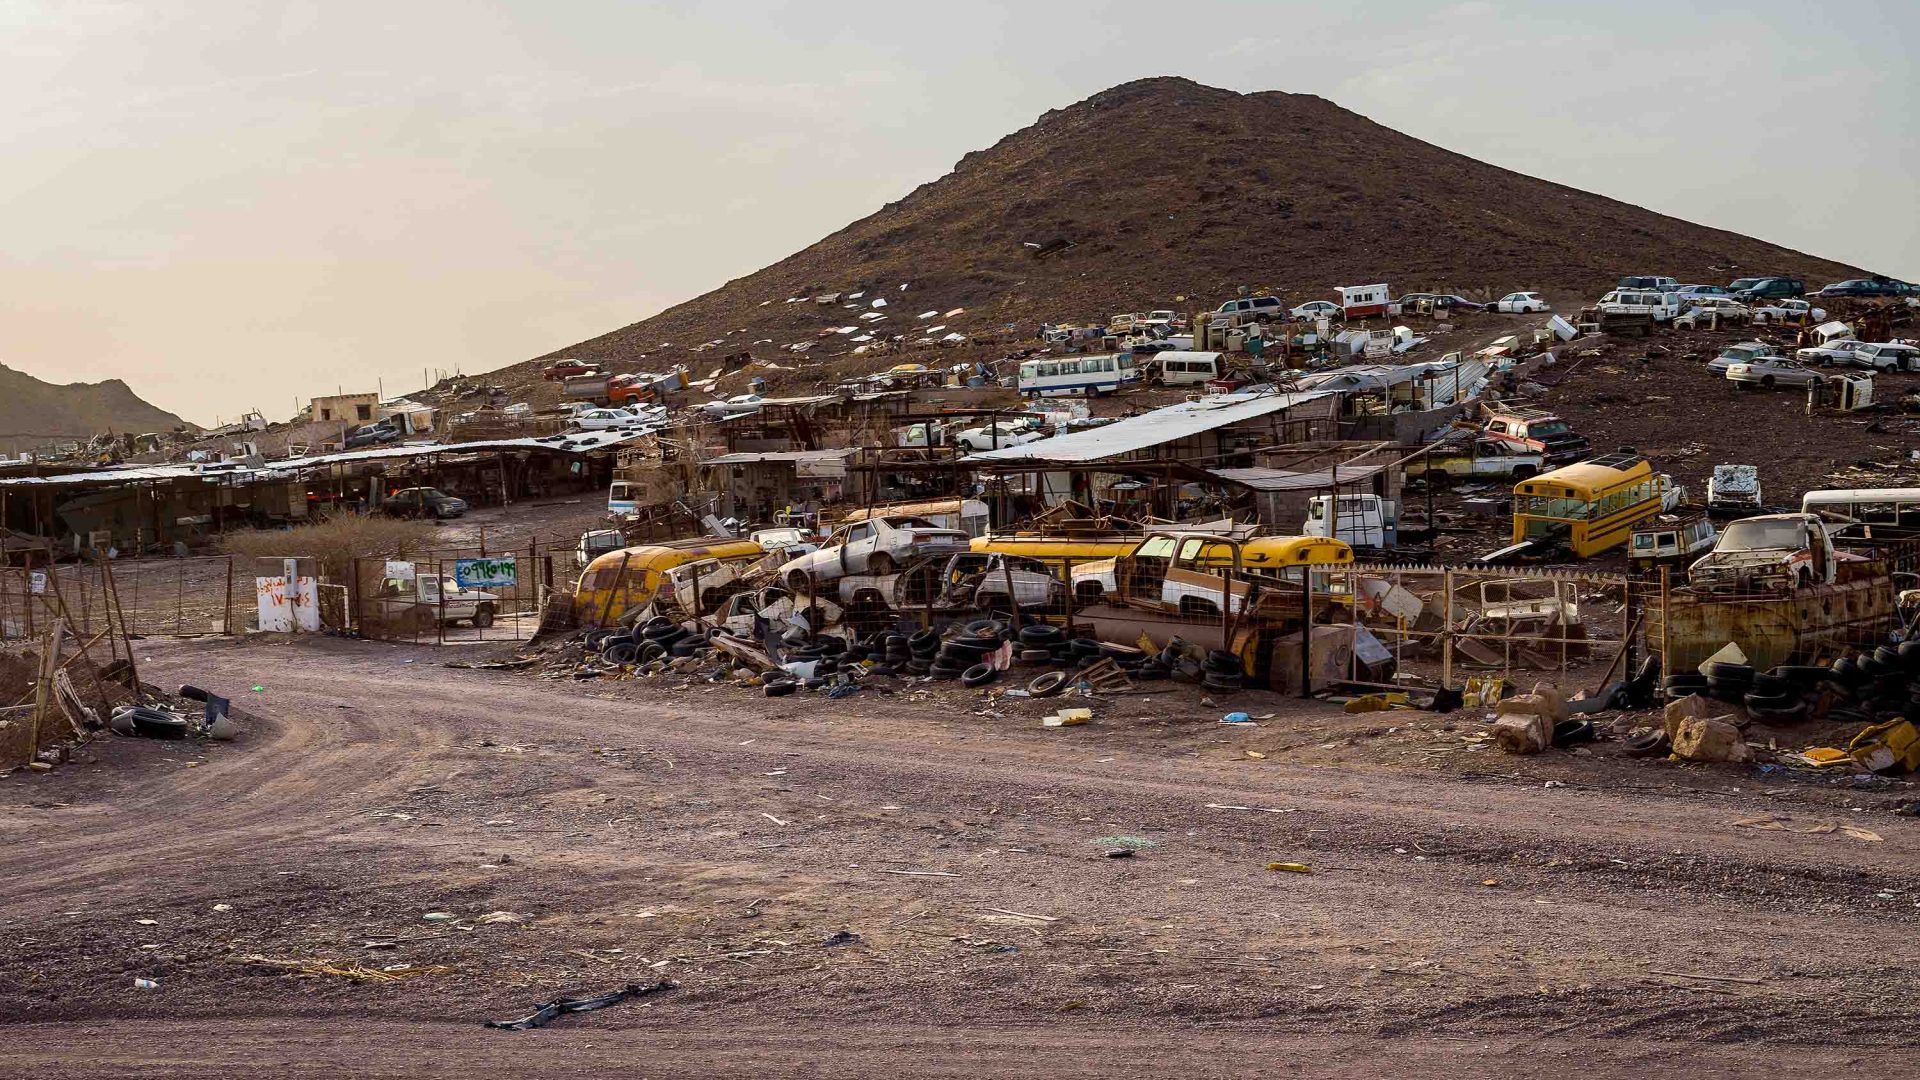 Abandoned cars piled up in a desert landscape.